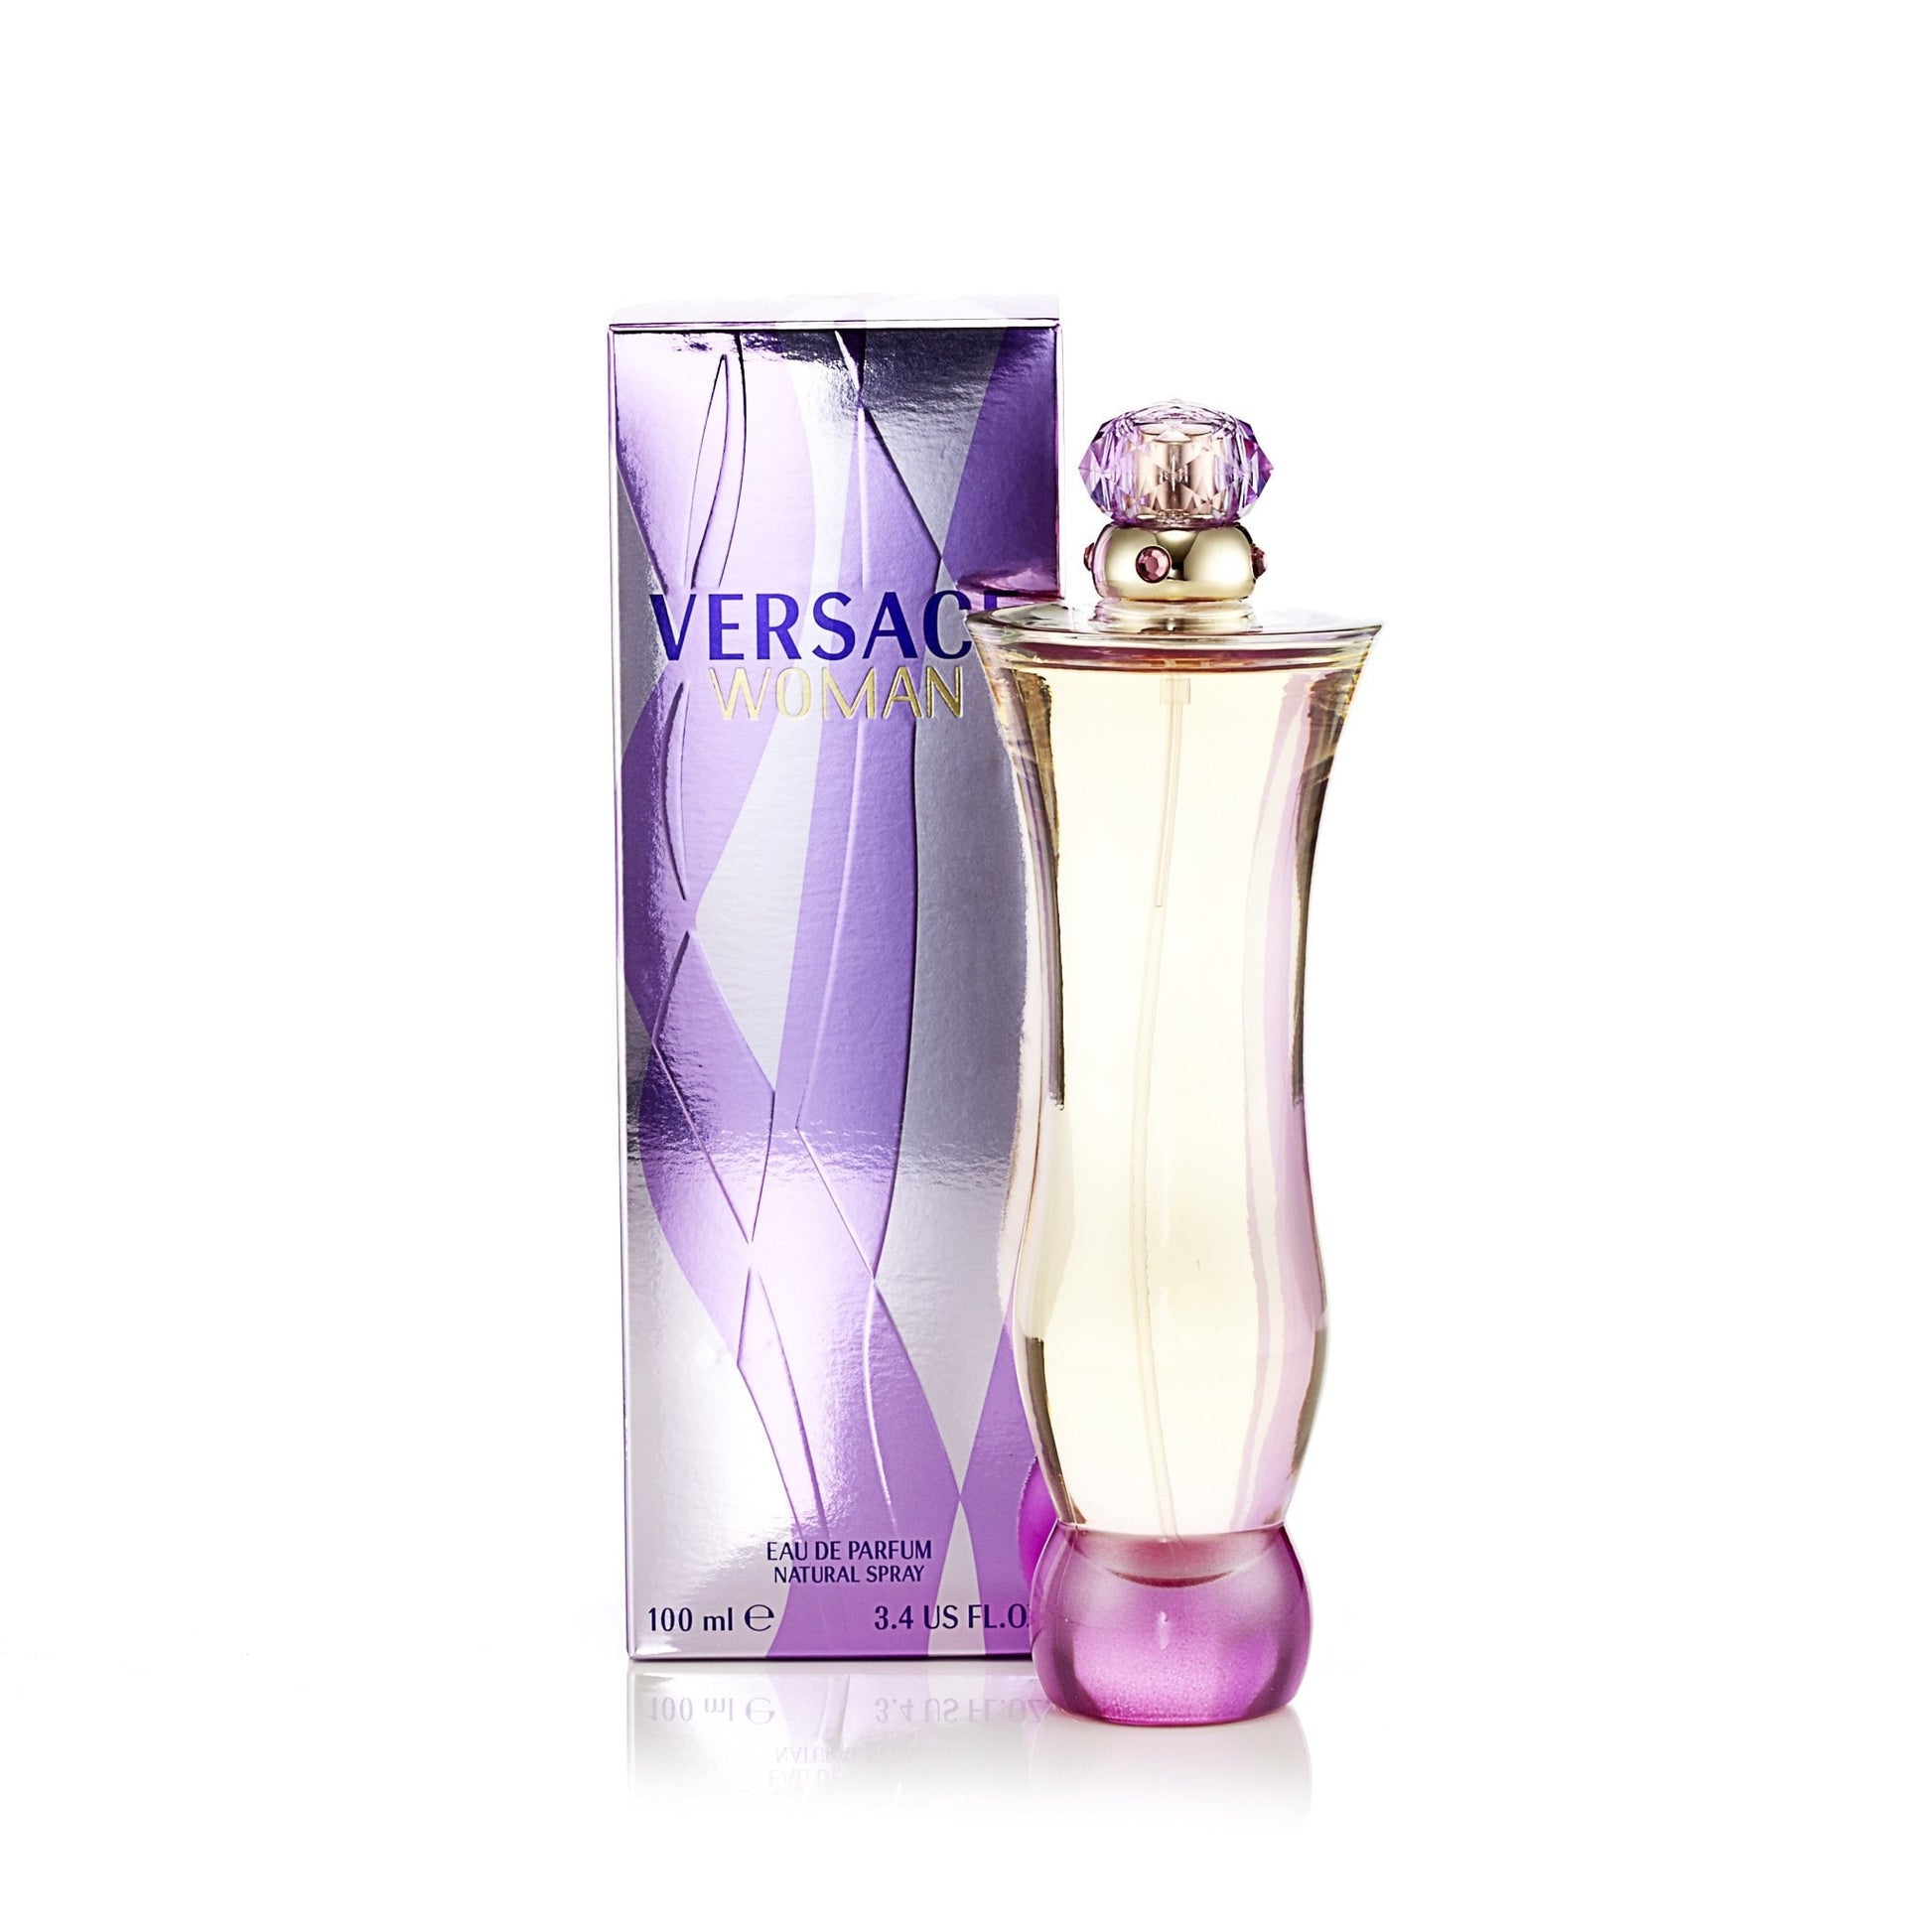 Versace Woman Eau de Parfum Spray for Women by Versace 3.4 oz. Click to open in modal